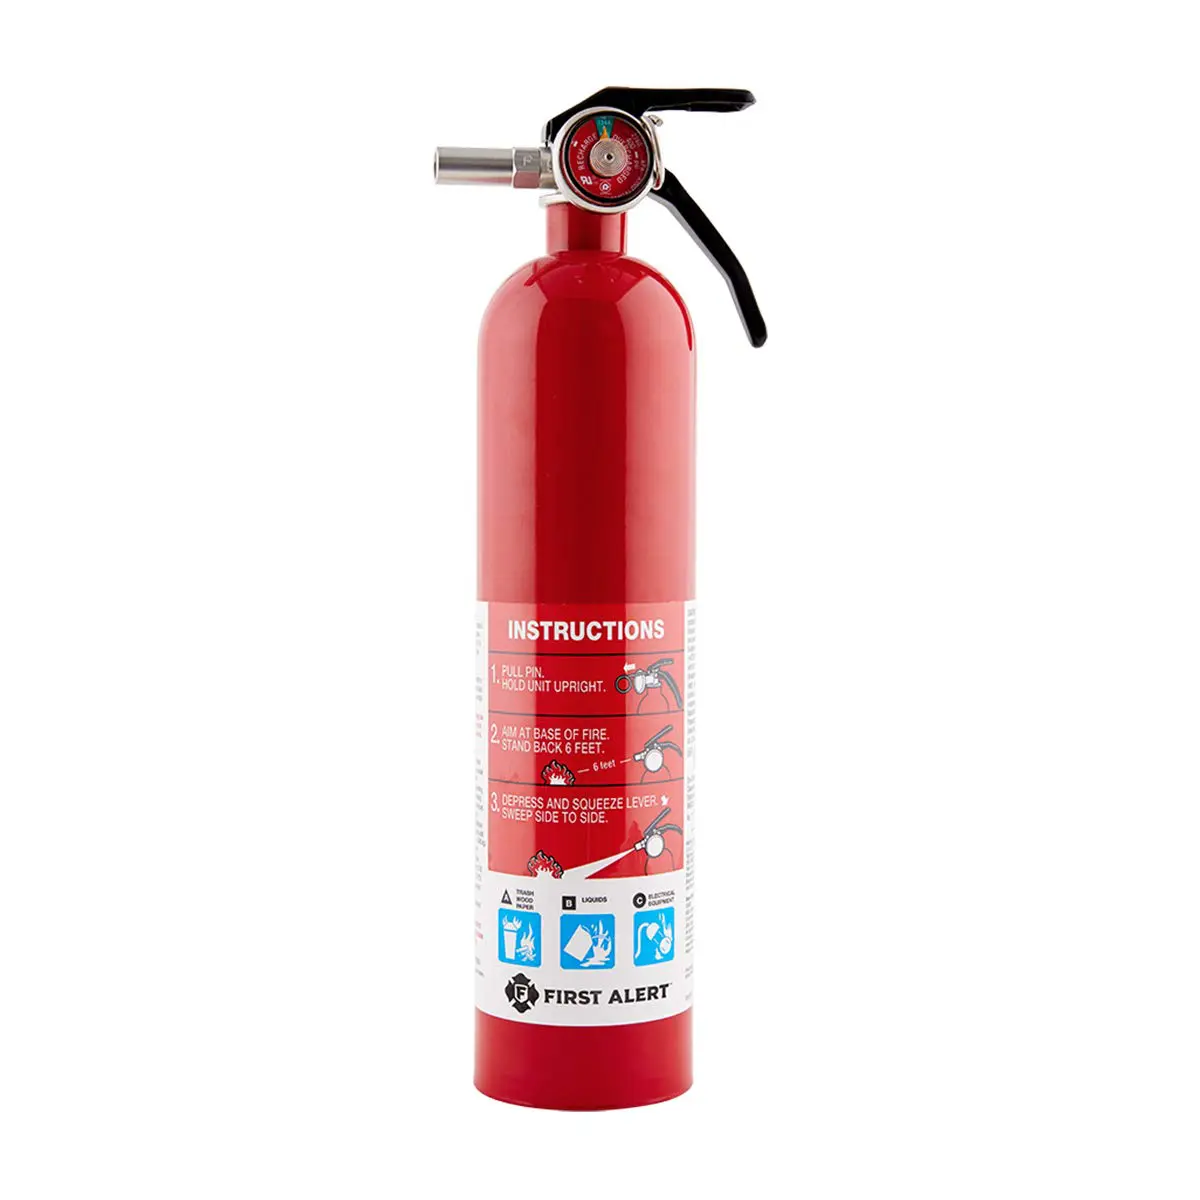 First Alert Fire Extinguisher | Standard Home Fire Extinguisher, Red, 1038789